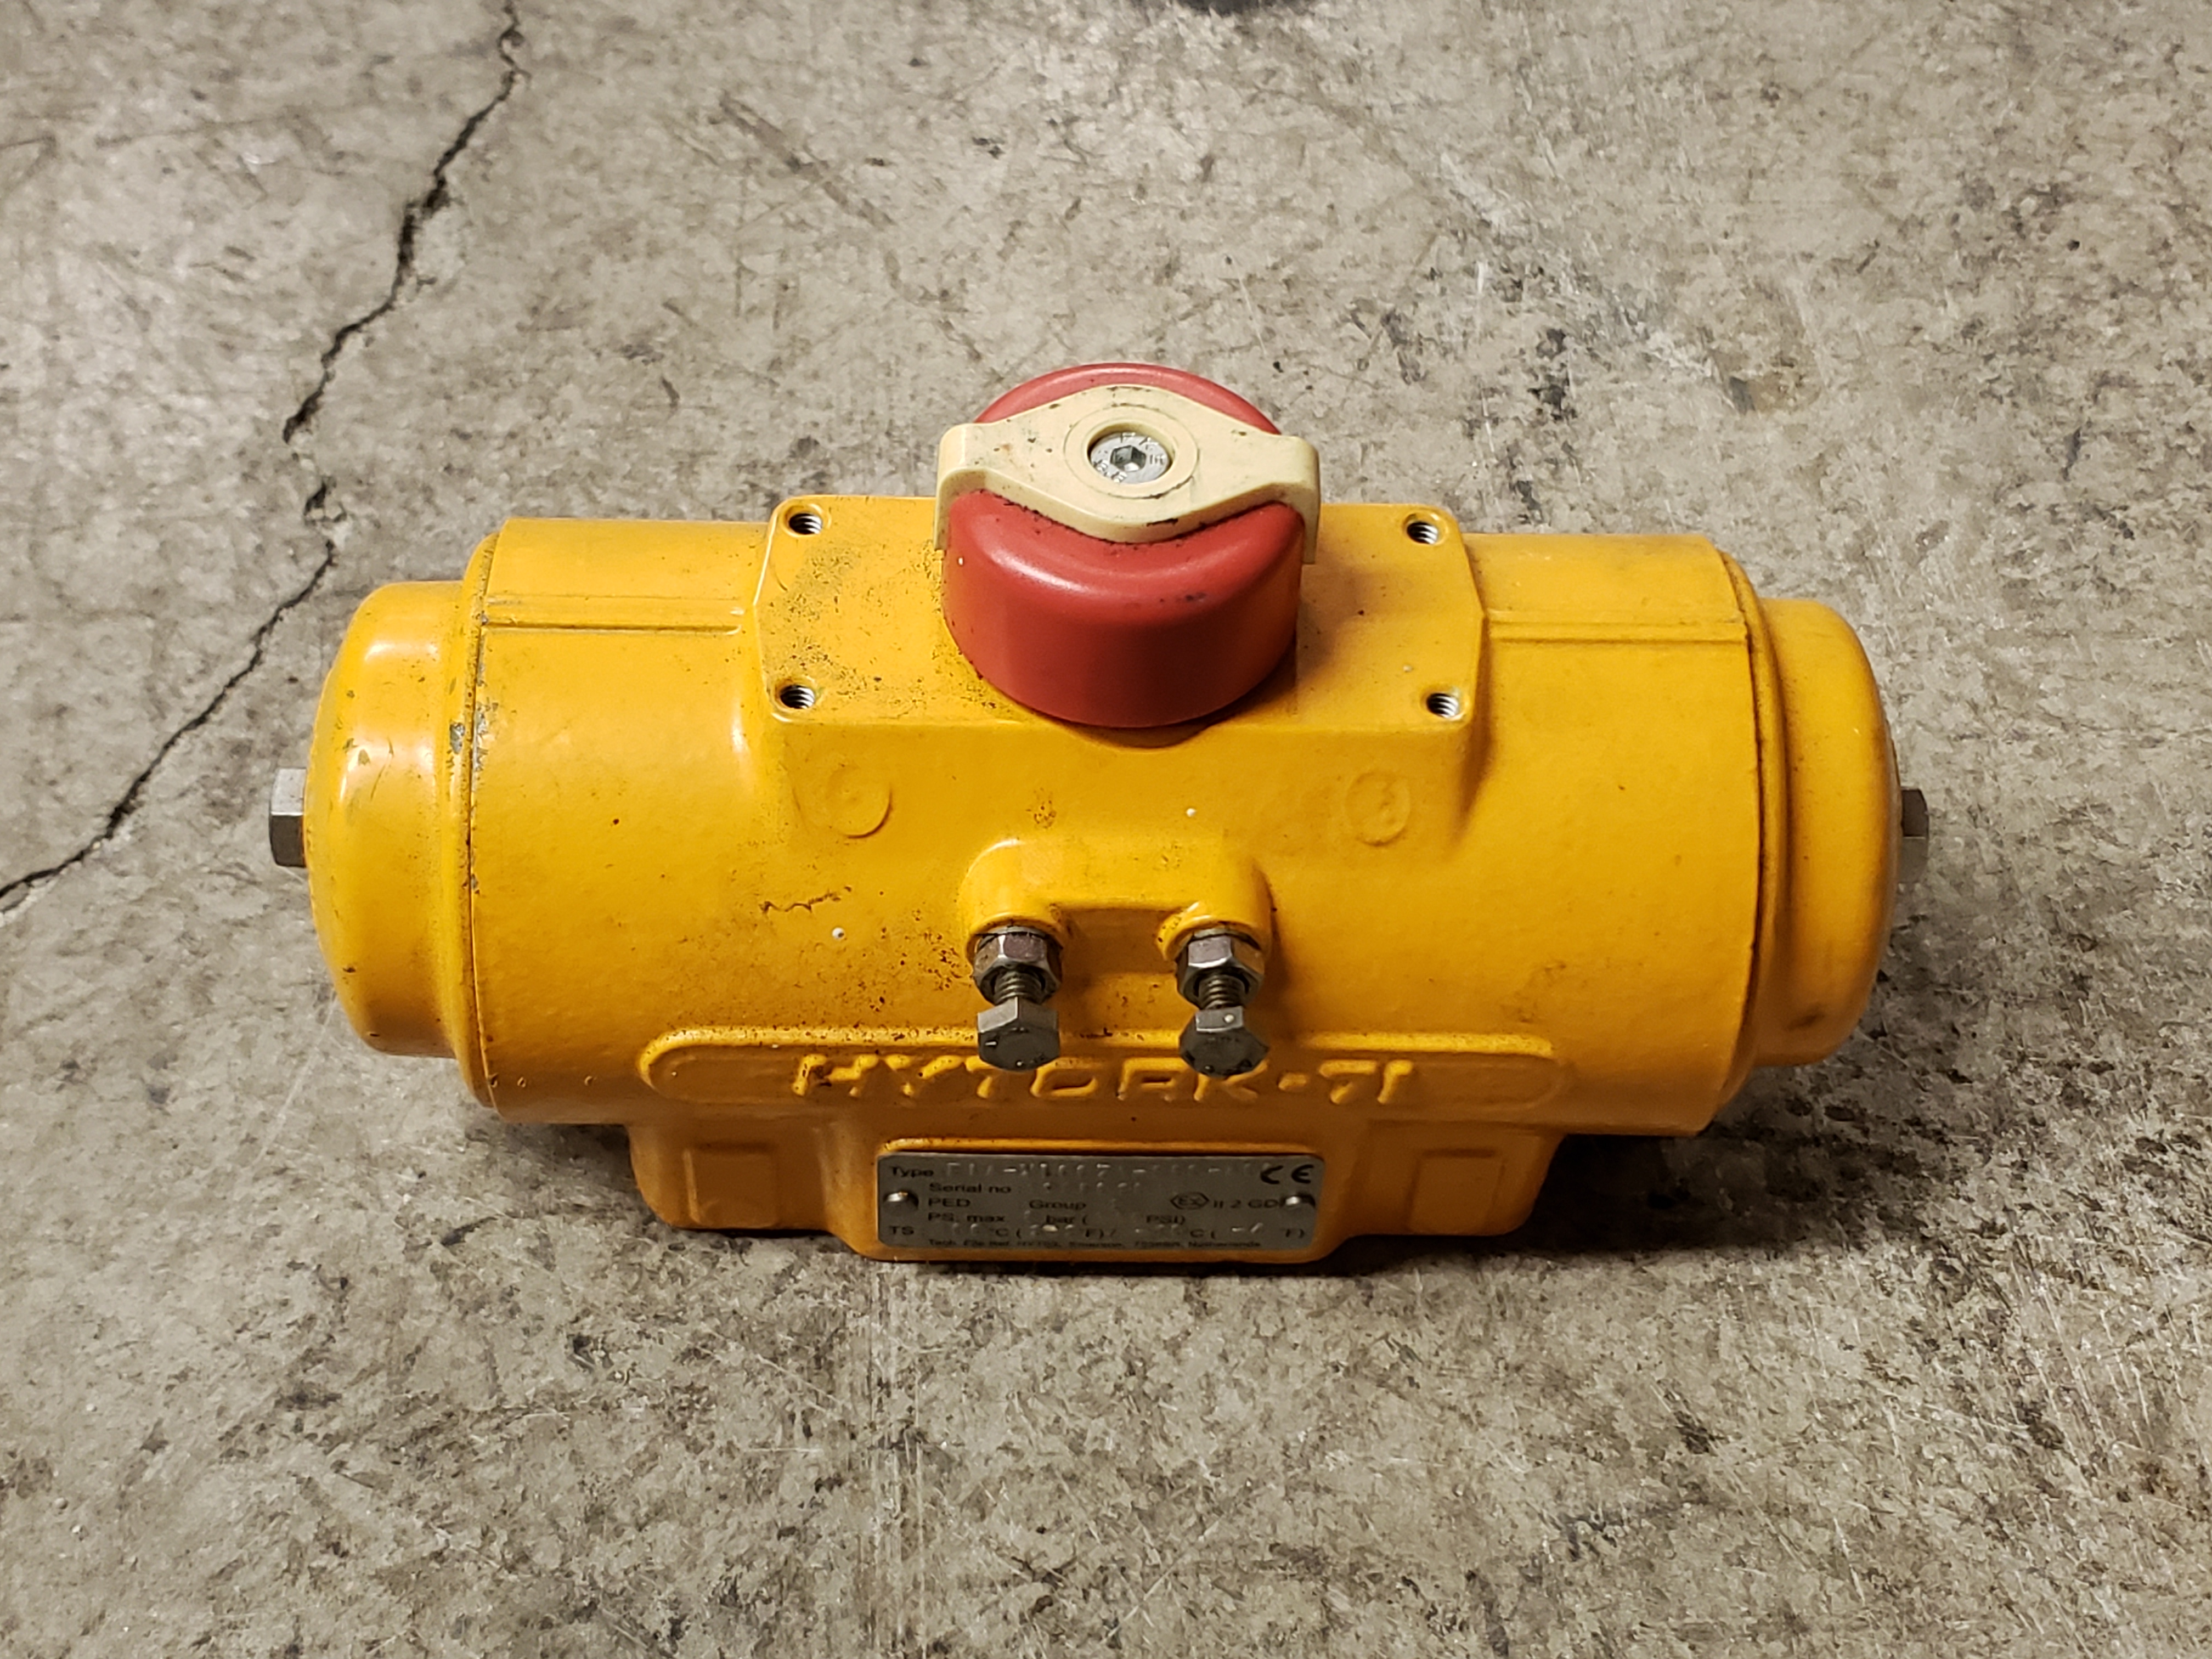 Hytork-71 valve actuator